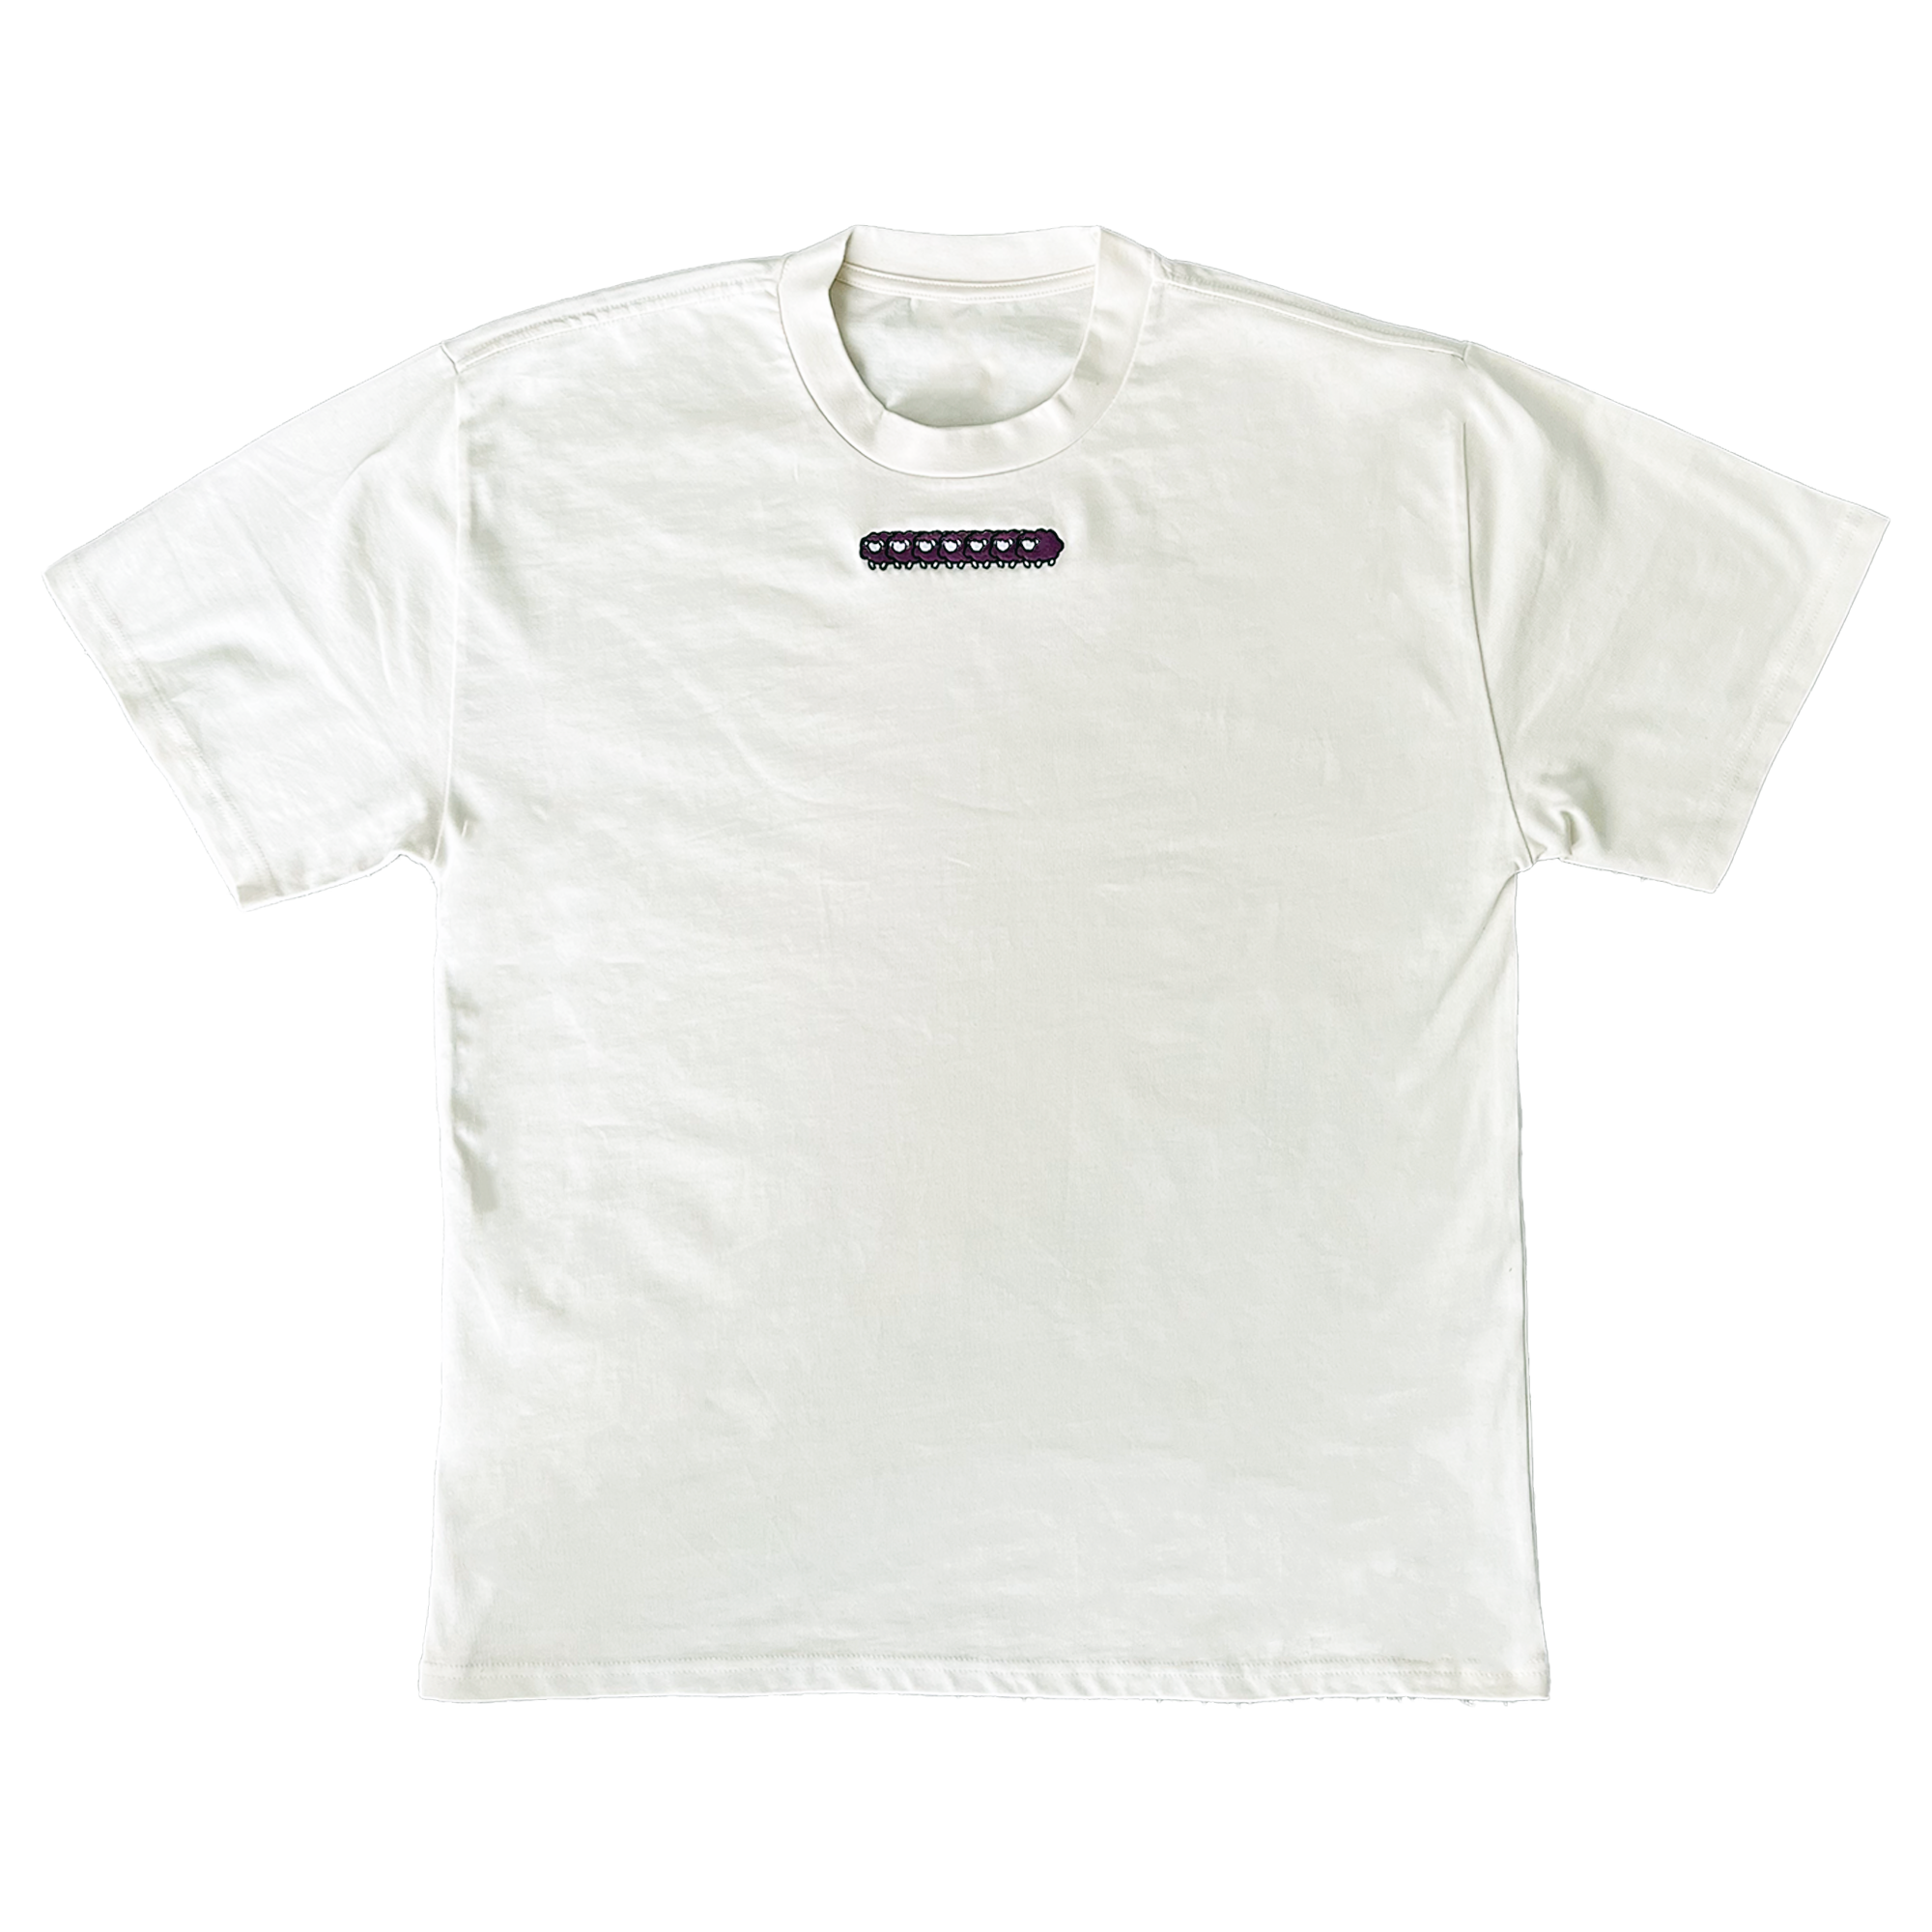 '22 purp sheep logo t-shirt - white